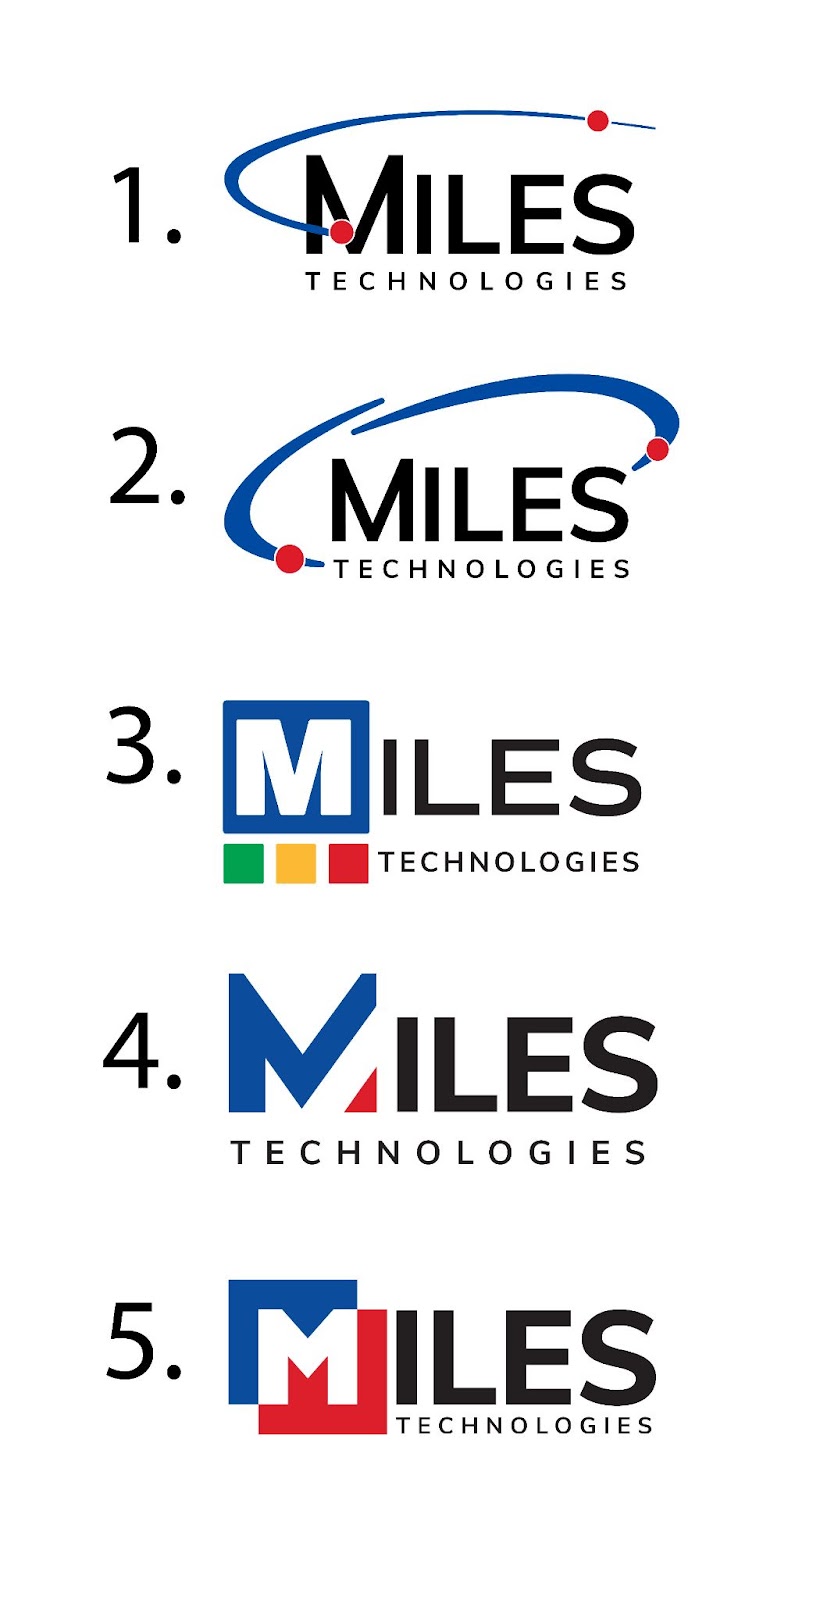 Miles Technologies logo variations